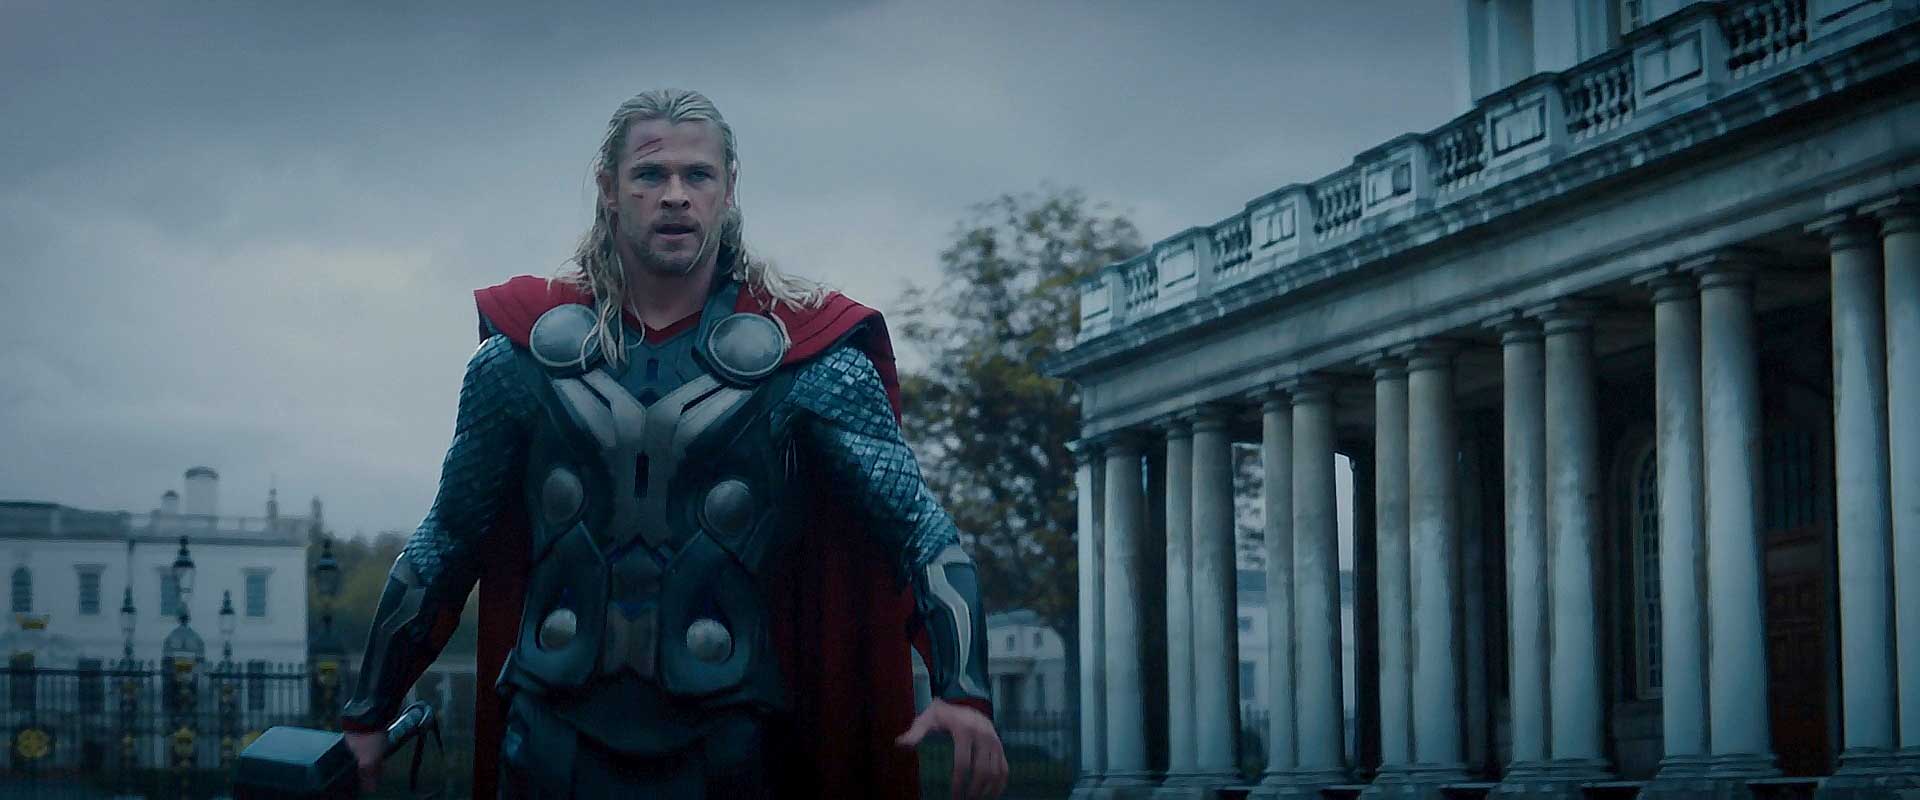 The Road To Avengers Endgame Thor The Dark World